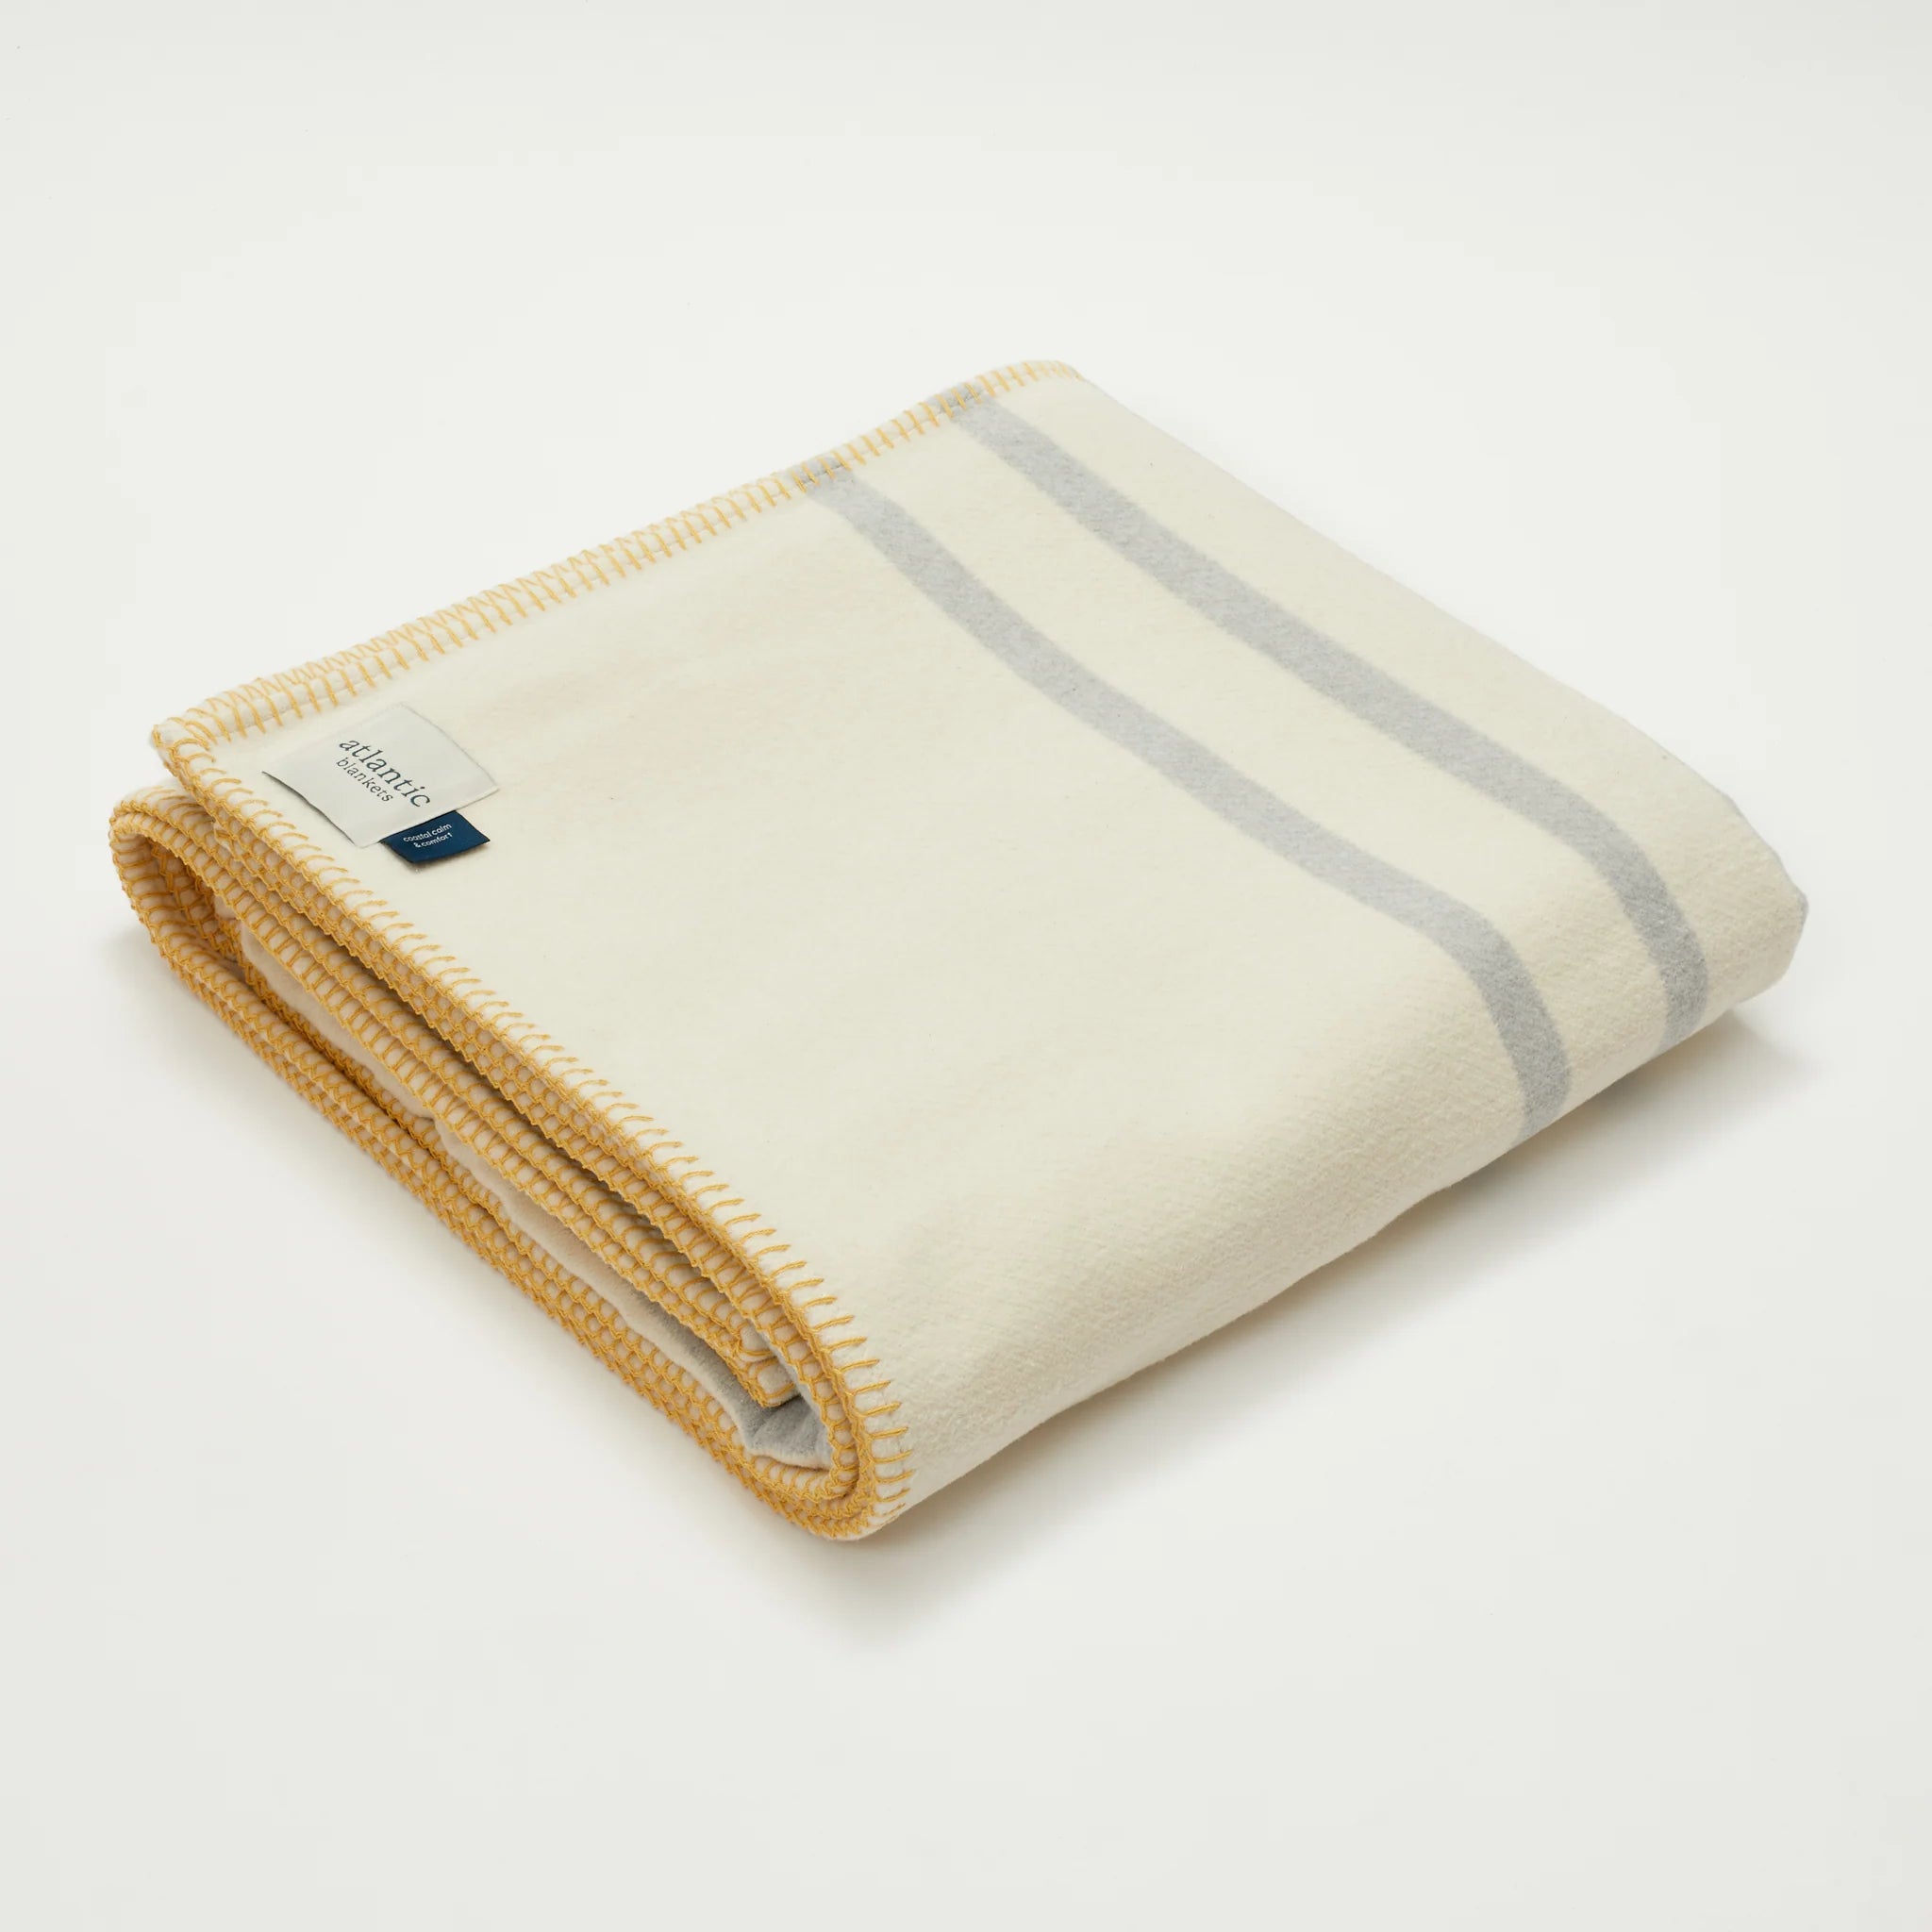 Grey Stripe Recycled Cotton Blanket - Yellow Stitch